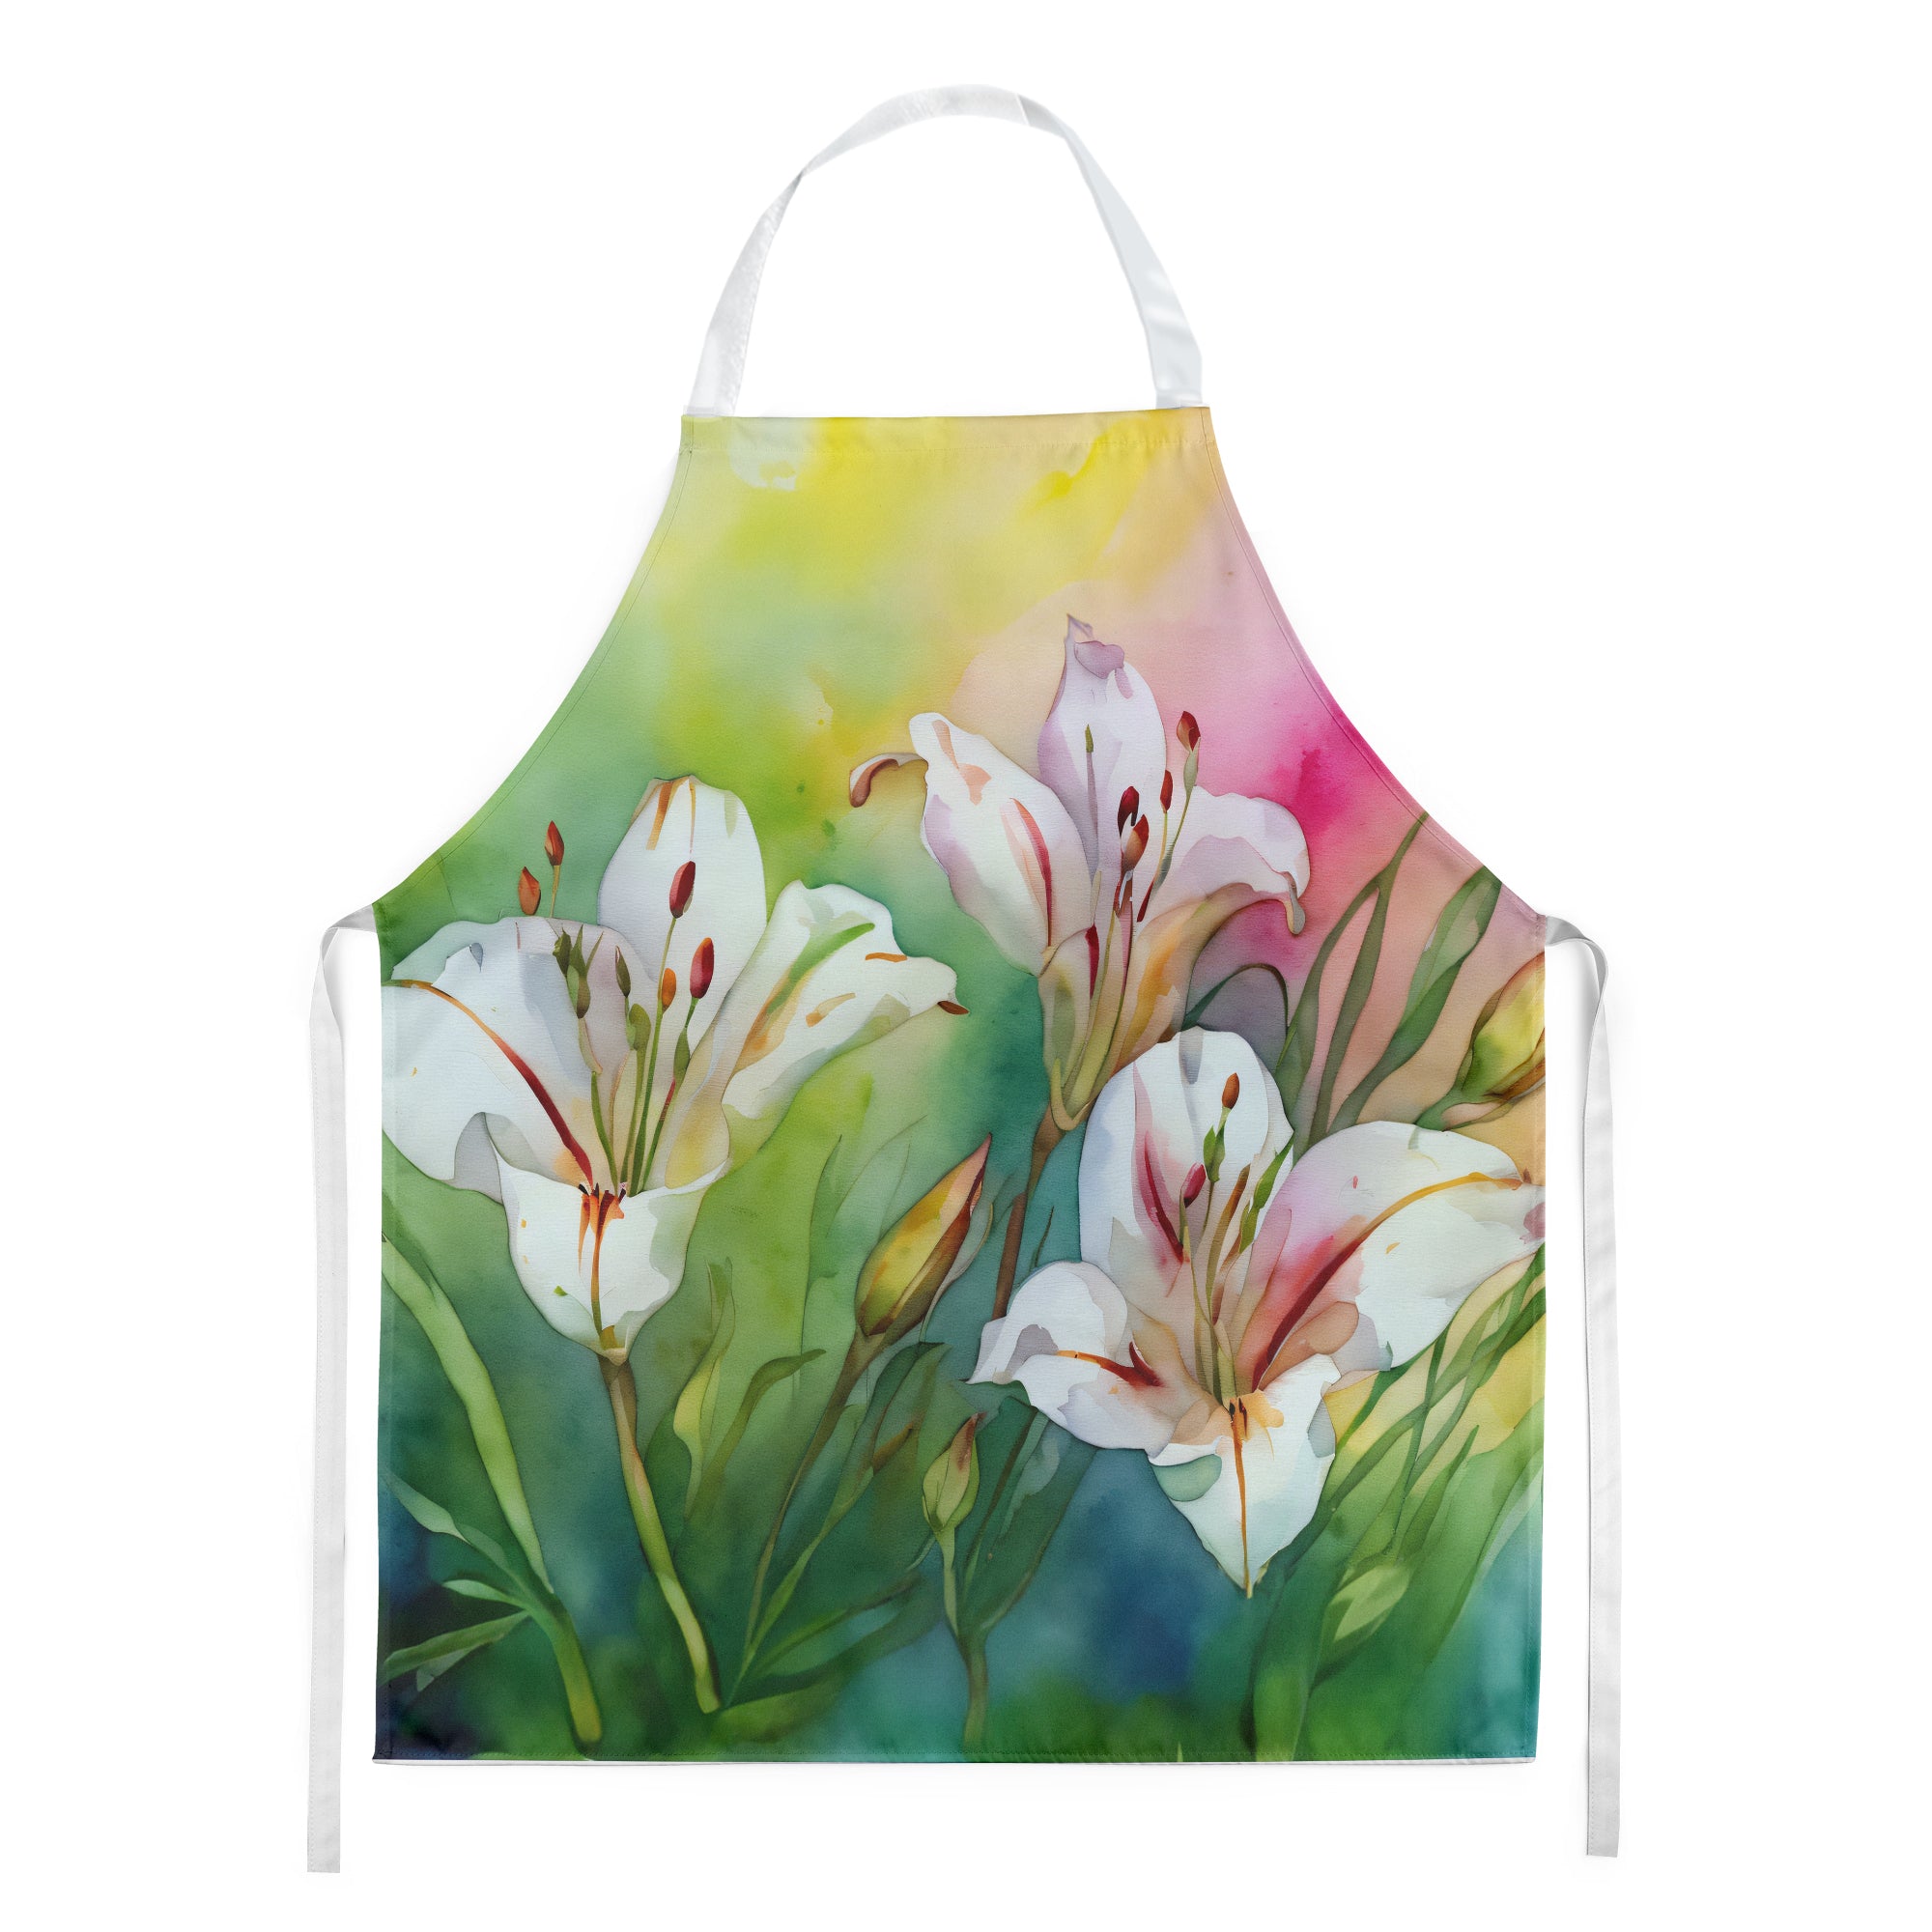 Buy this Utah Sego Lilies in Watercolor Apron